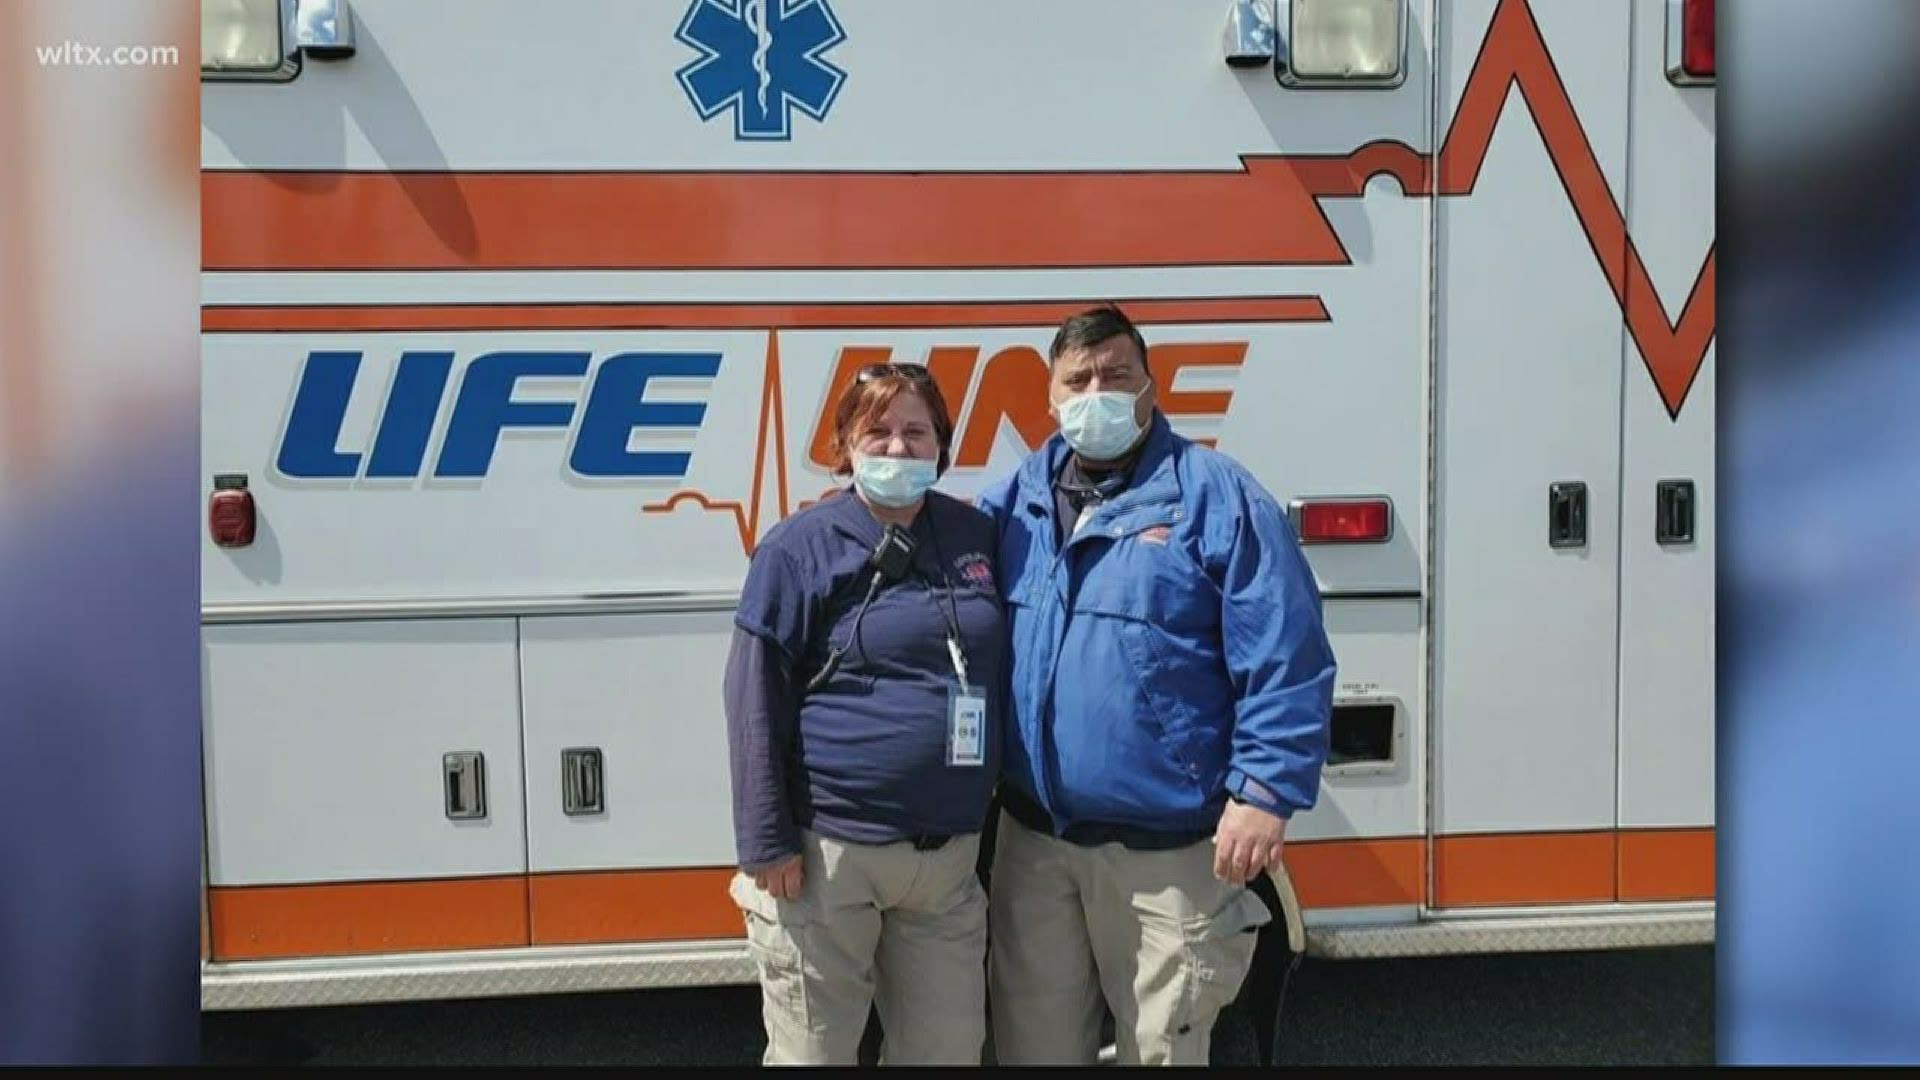 Six crew members from Lifeline Ambulance went to NY to help with coronavirus